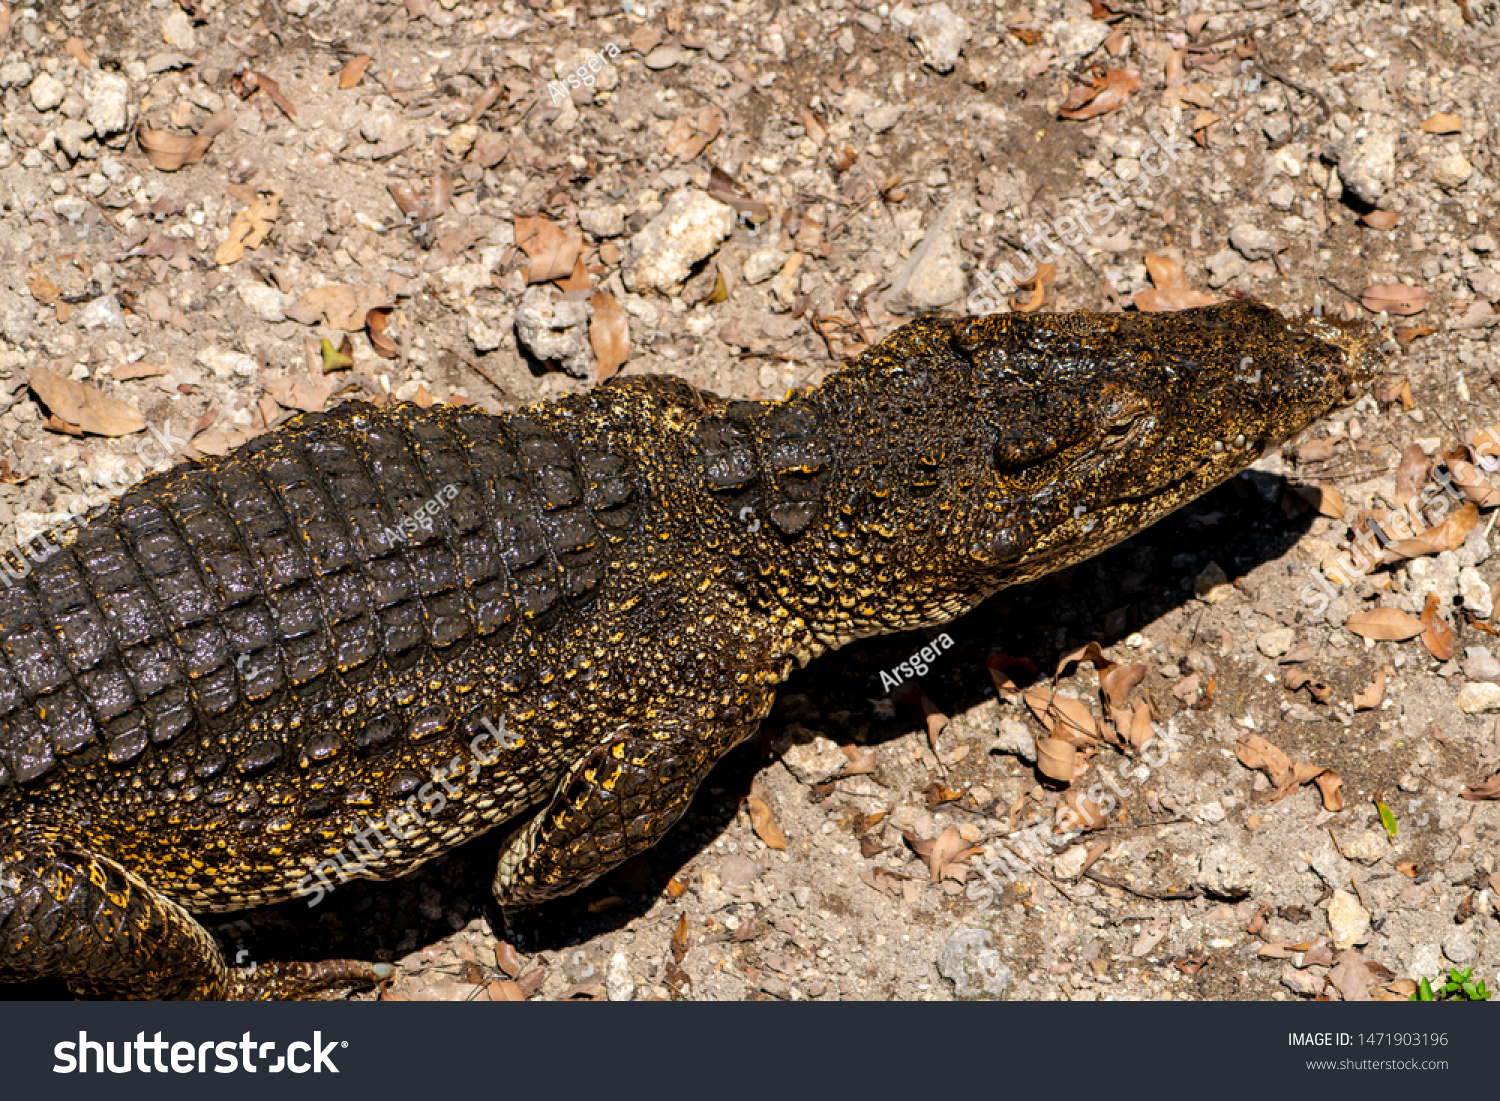 Crocodile or alligator close-up portrait. Wildlide and animal photos. Predators and reptiles #1471903196